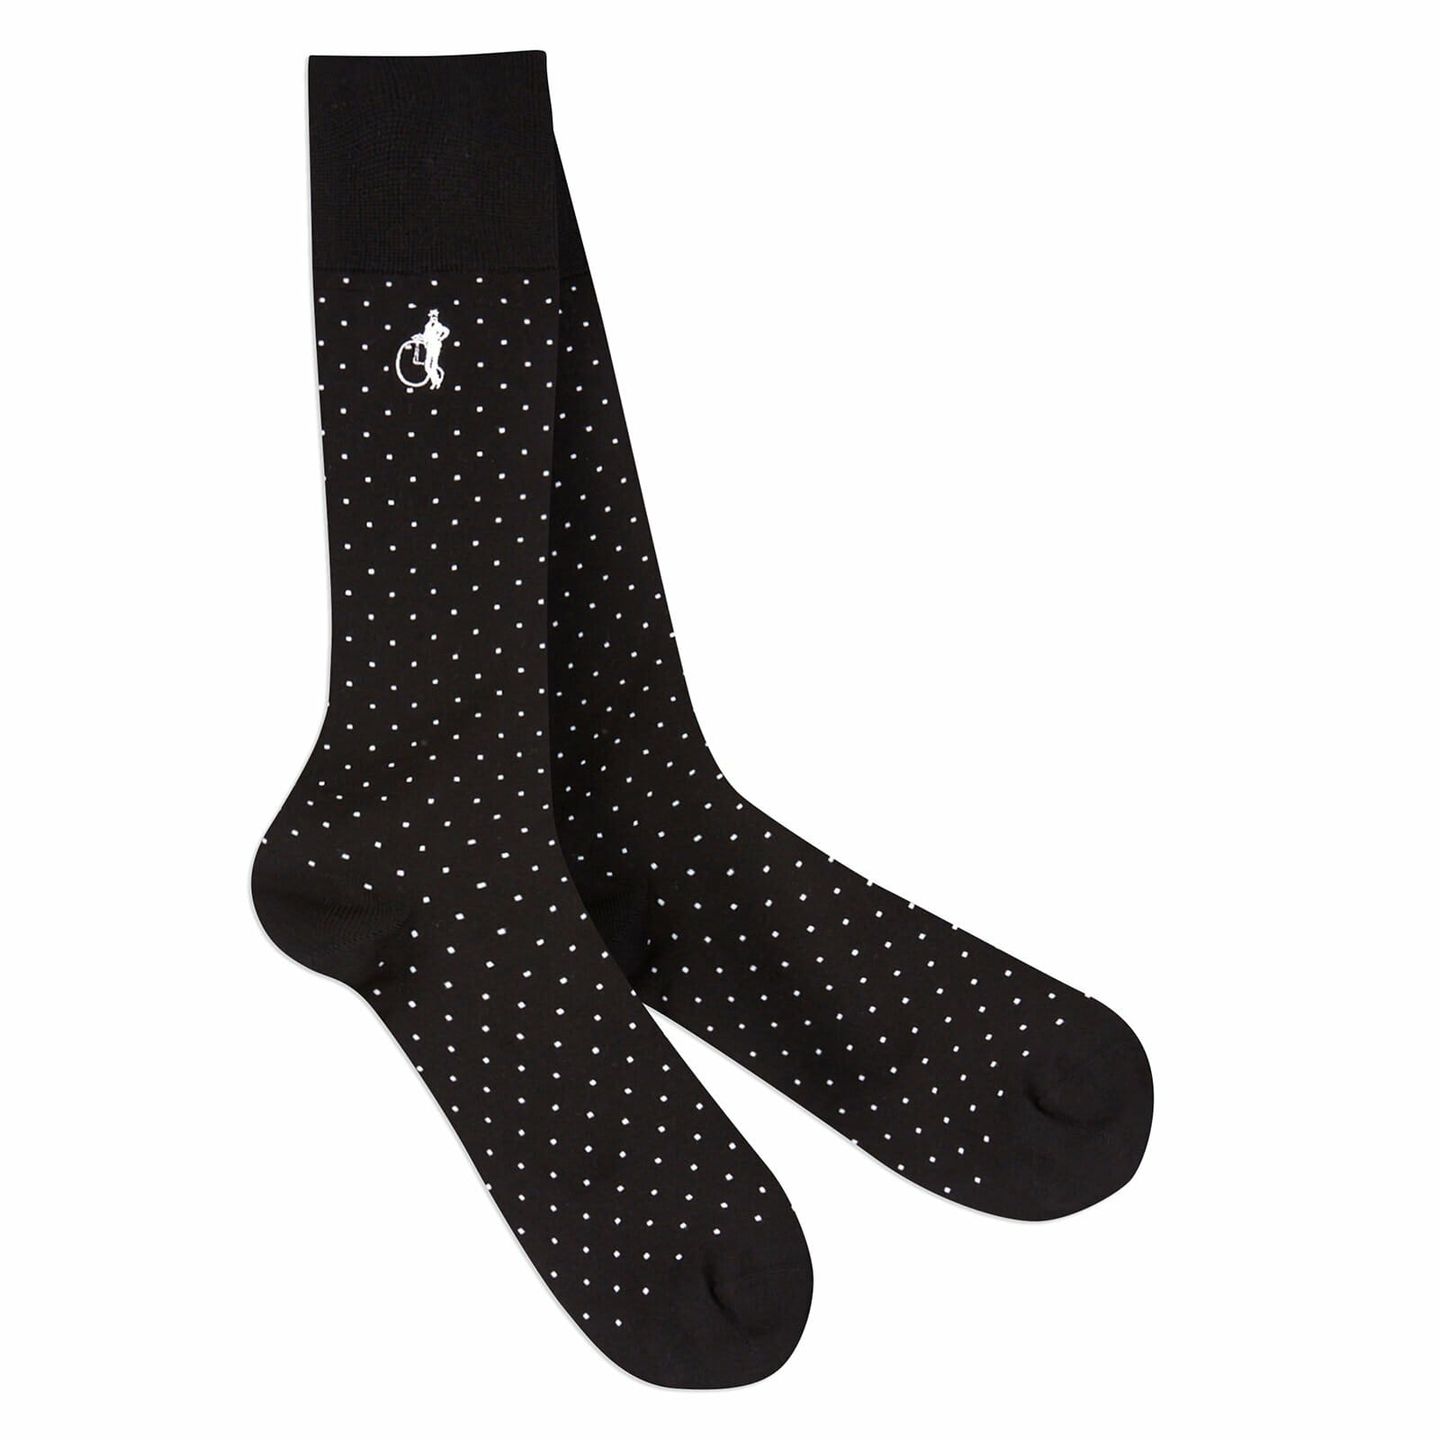 Spot of Style Socks